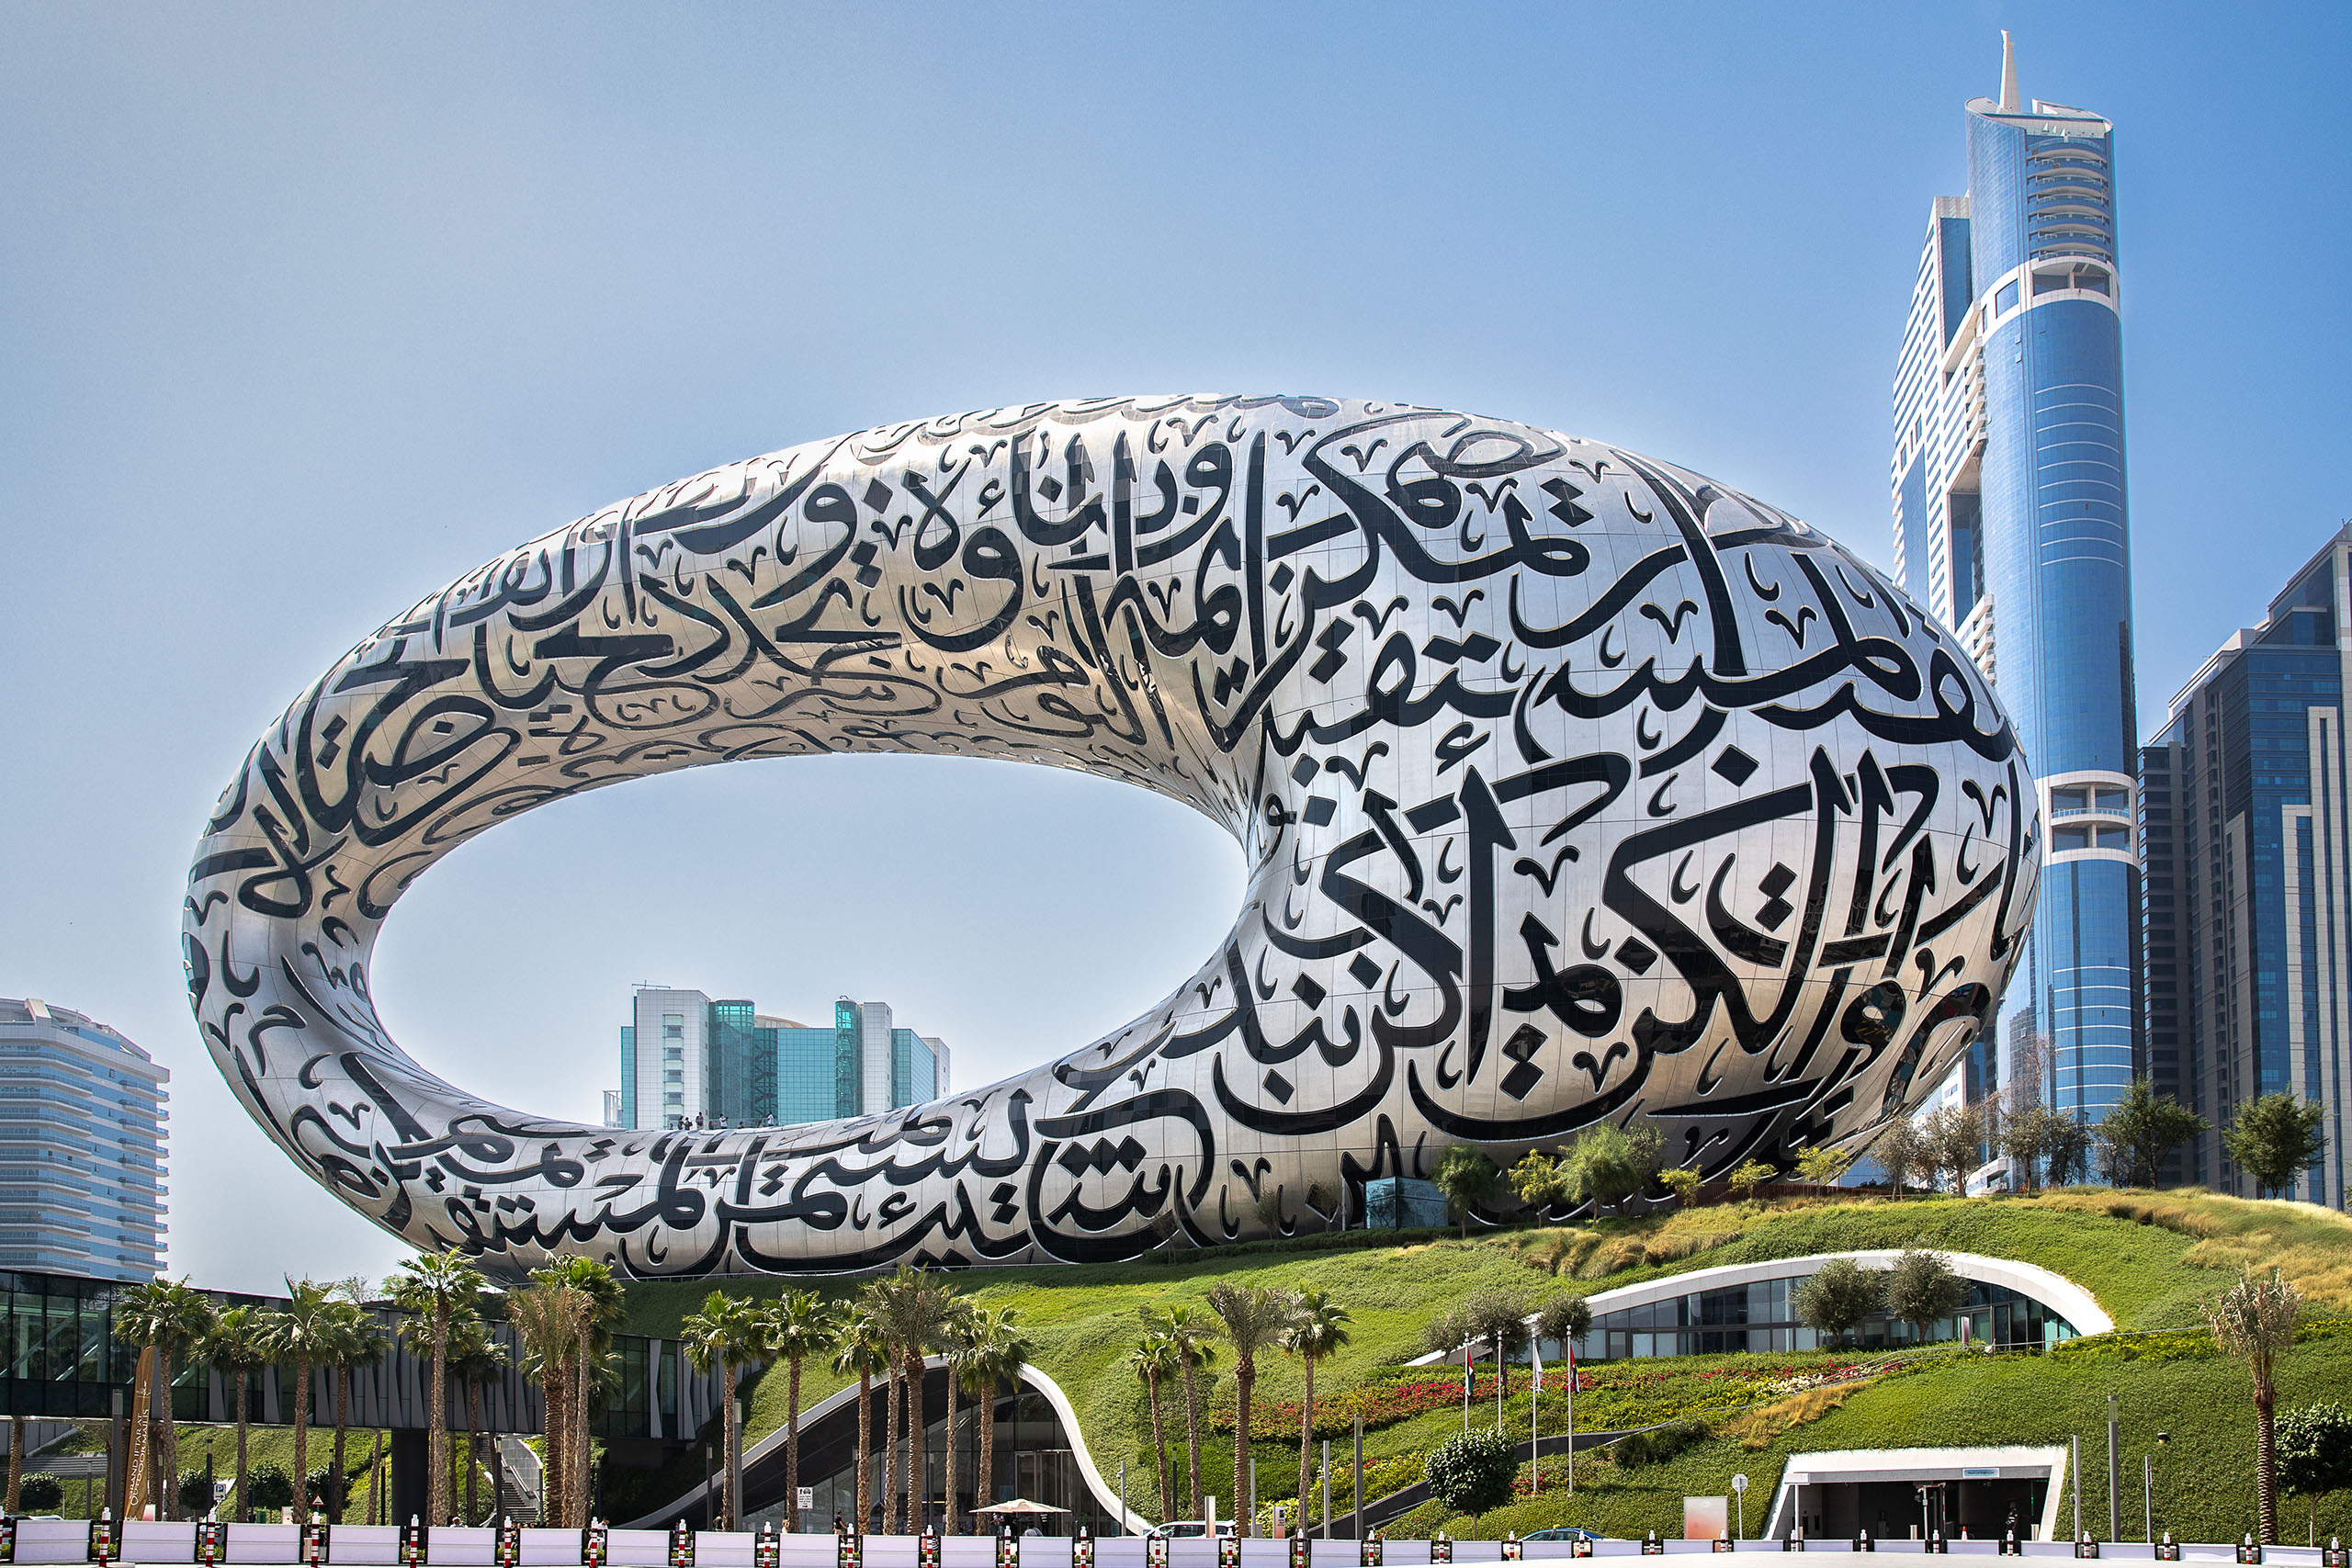 Museum of the future. Futuristic building. Sheikh Zayed Road, Dubai, United Arab Emirates. April 6, 2022.